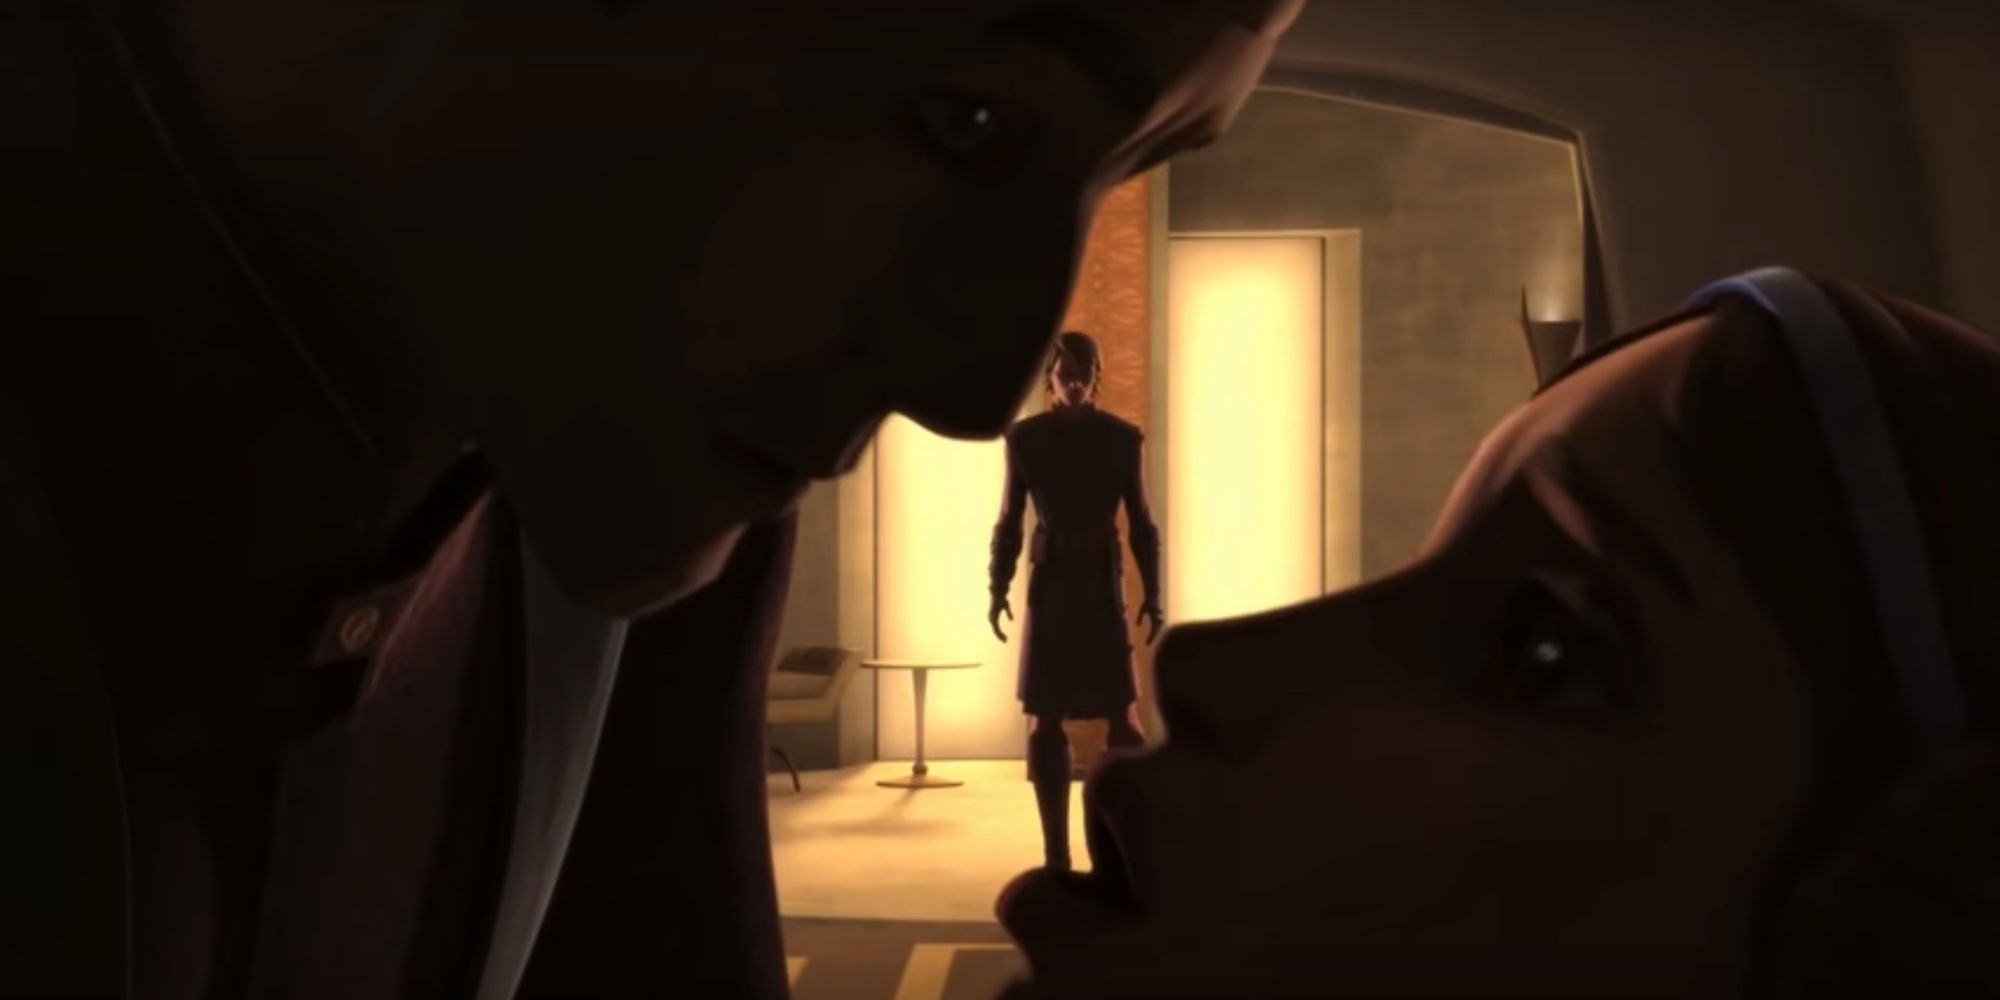 Anakin walks in on Clovis trying to kiss Padme in Clone Wars TV series